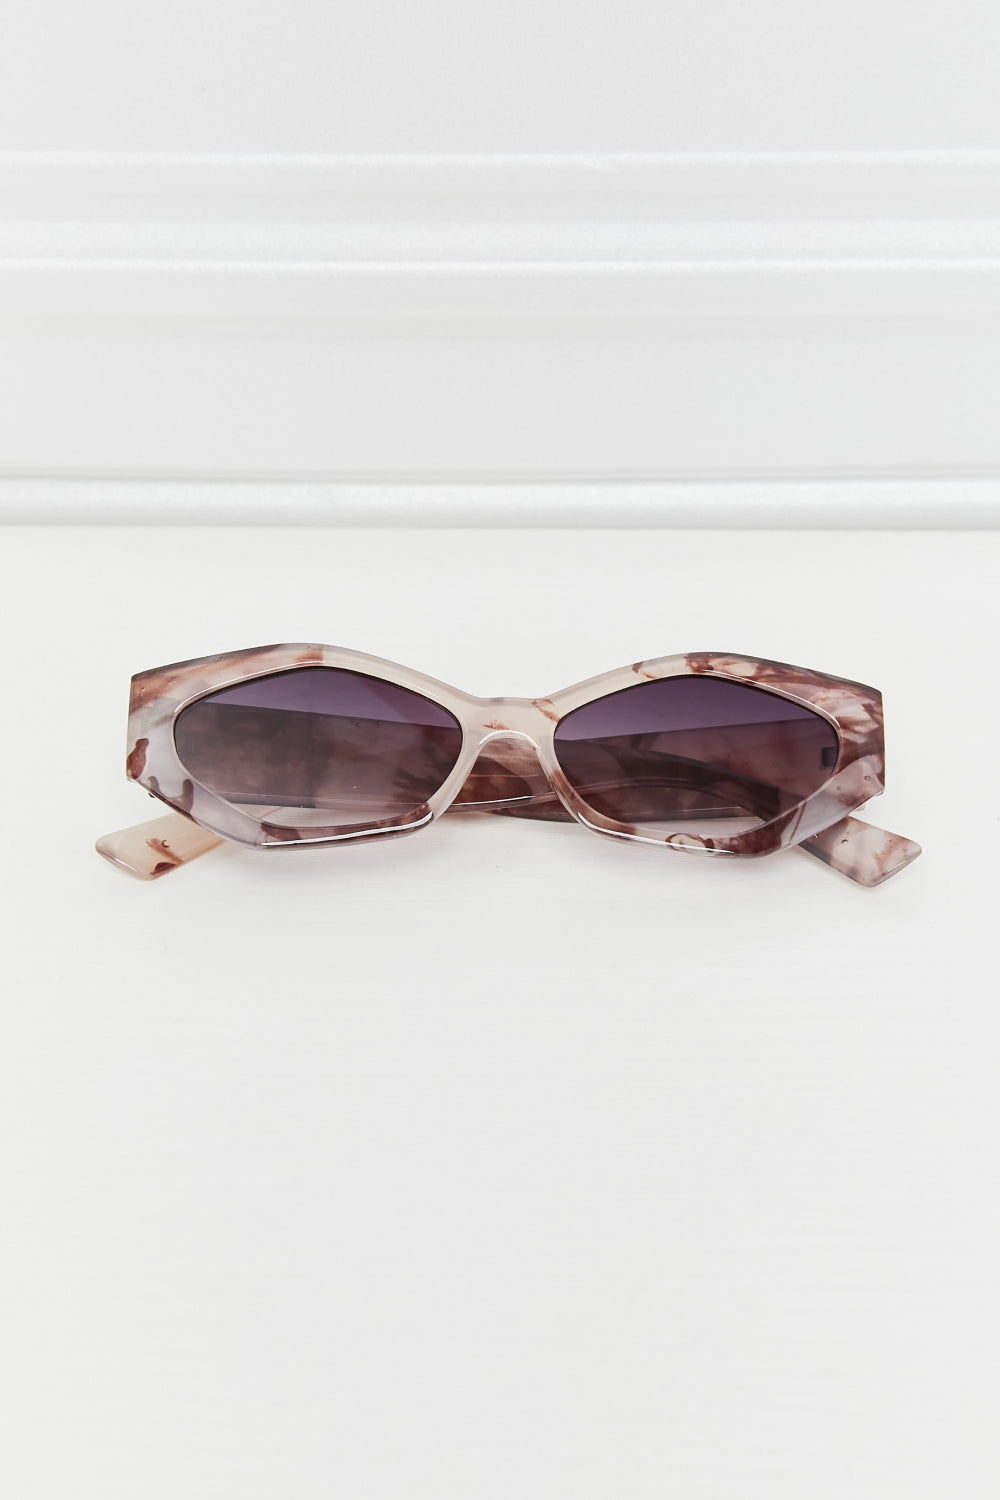 Polycarbonate Frame Wayfarer Sunglasses - The Fashion Unicorn